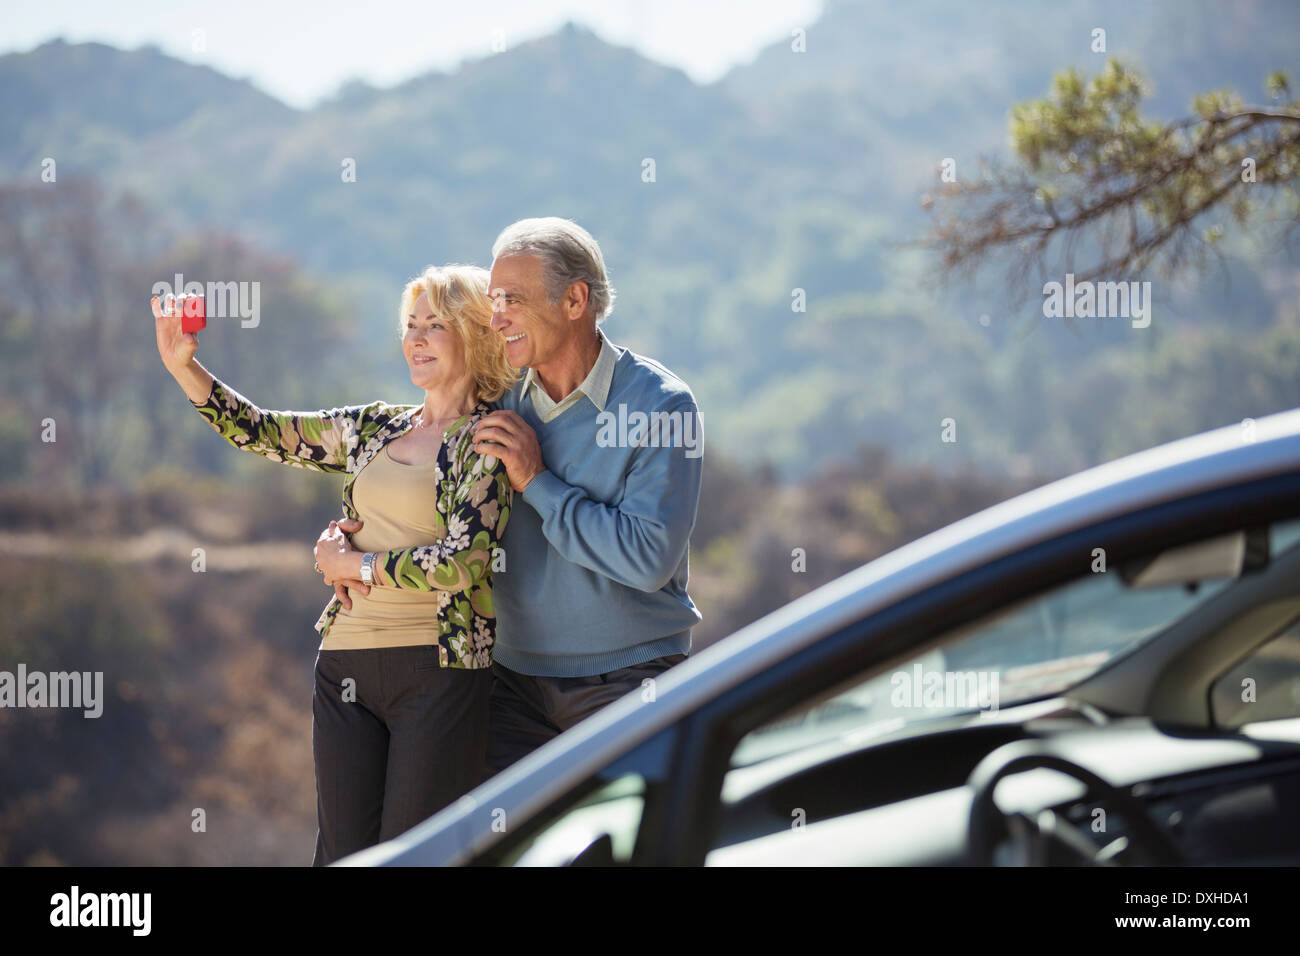 Älteres paar Einnahme Selbstbildnis am Straßenrand außerhalb Auto Stockfoto